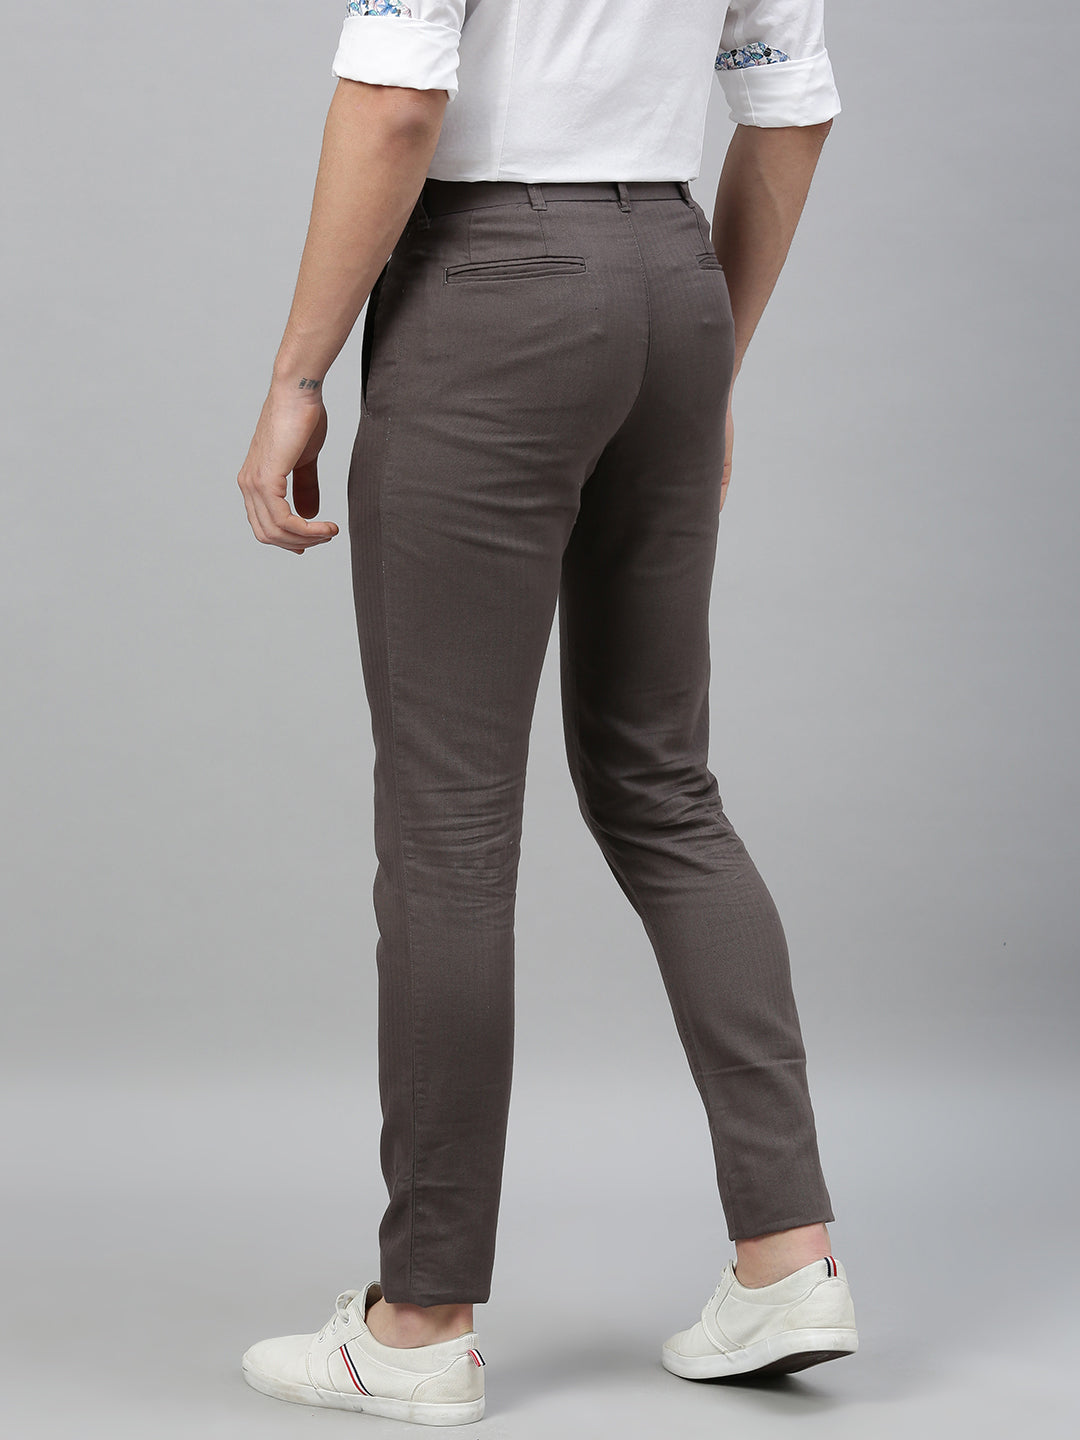 Buy PlaidPlain Mens Slim Fit Khaki Pants Stretch Cropped Chino Skinny  Pants Khaki 27W x 27L at Amazonin